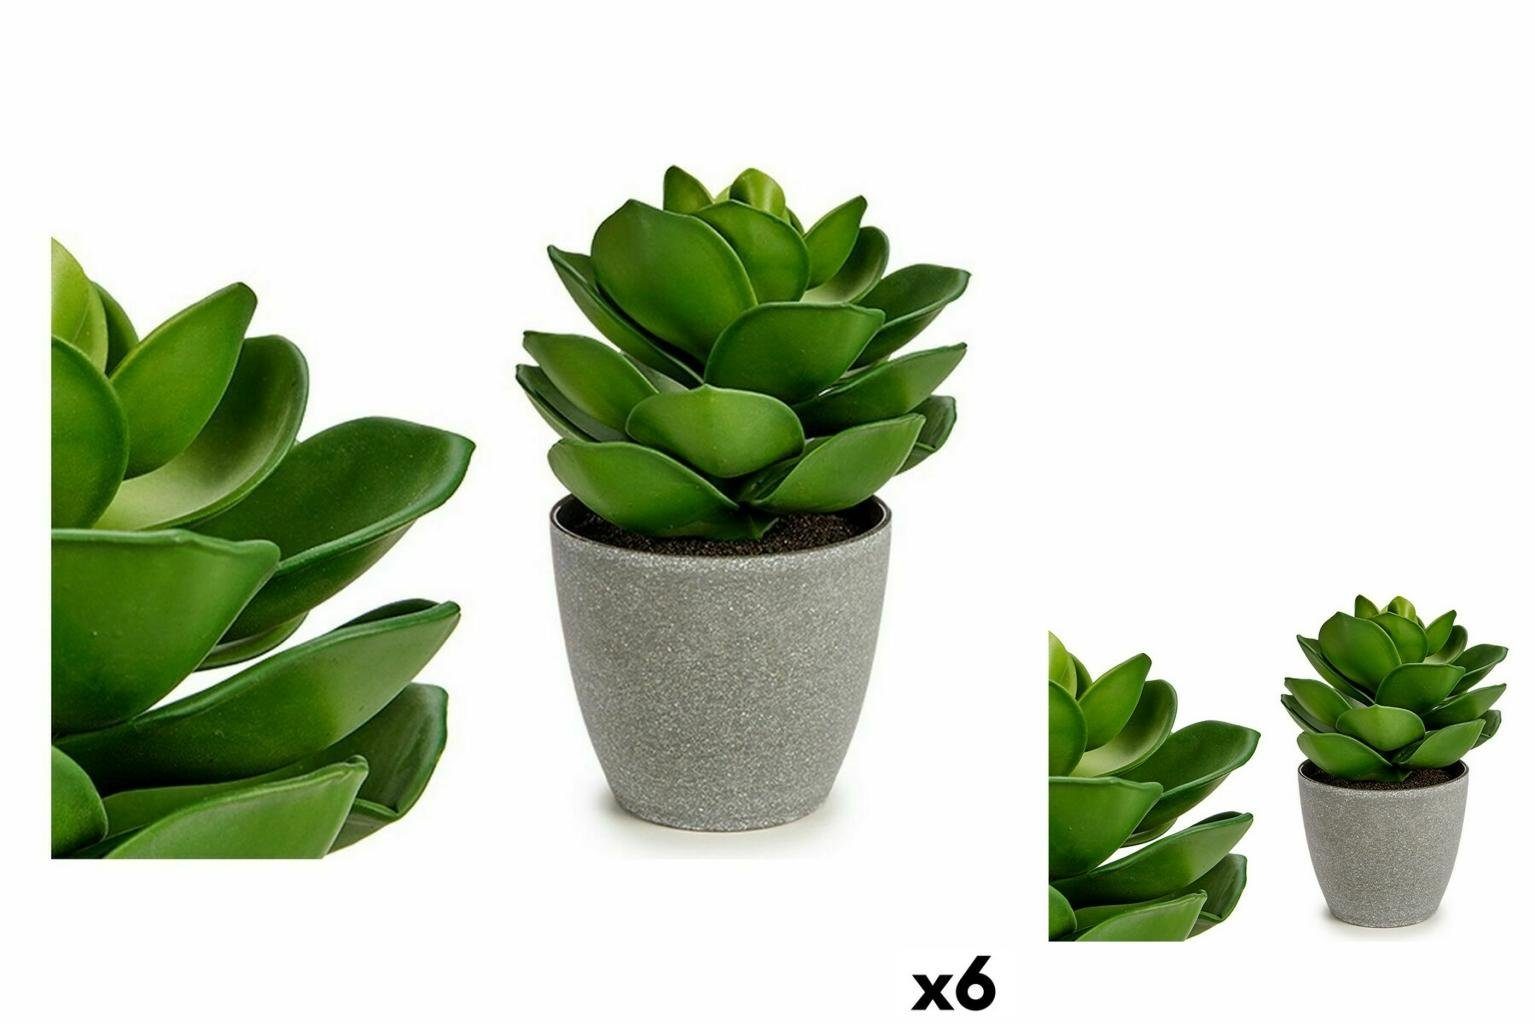 Ibergarden Dekoobjekt Dekorationspflanze Grau grün x 6 x 16 16 Stück 21 cm